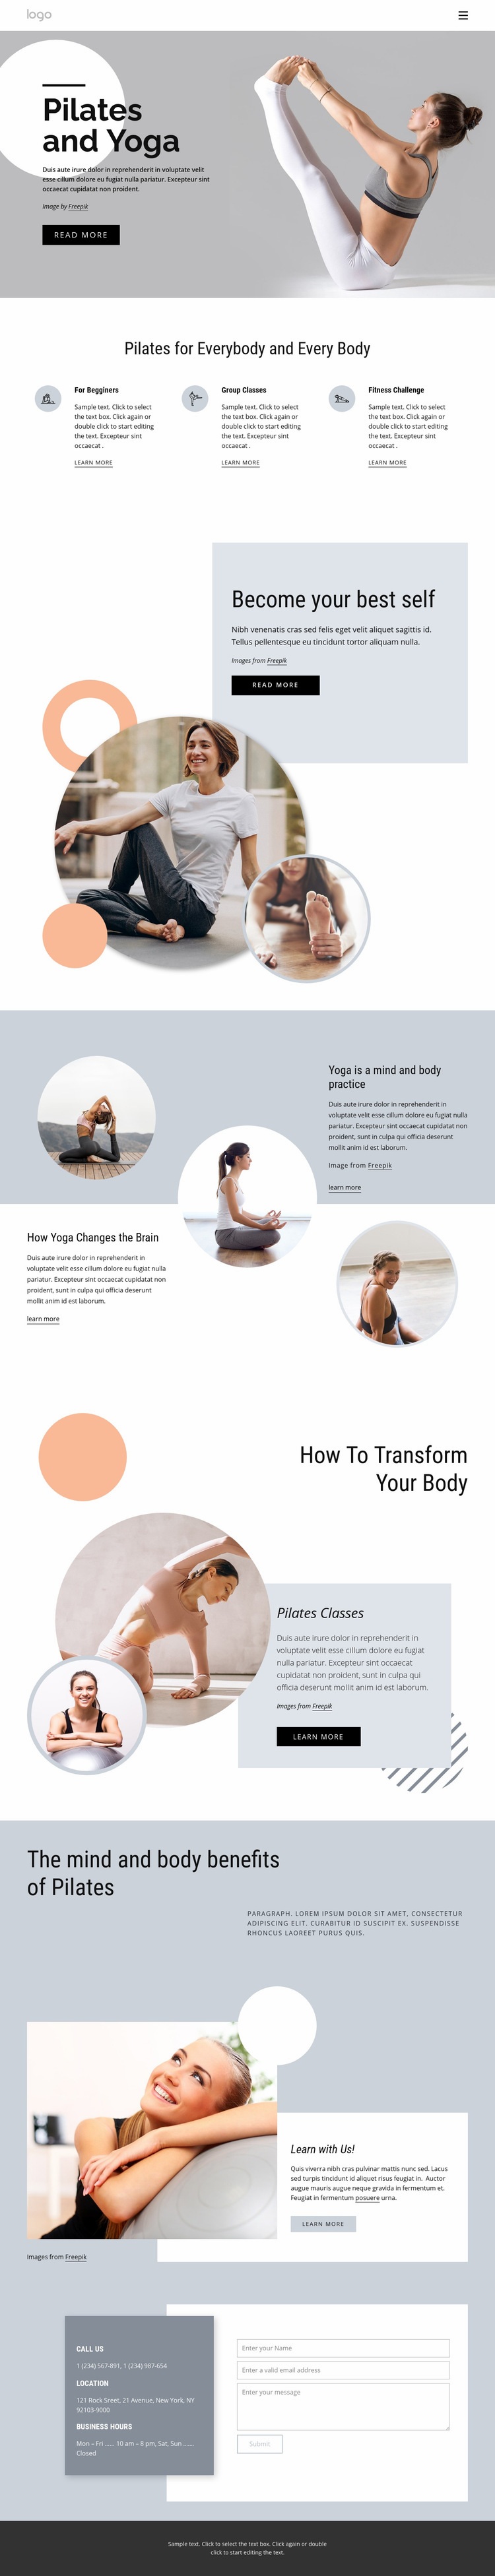 Pilates and yoga center Web Page Design